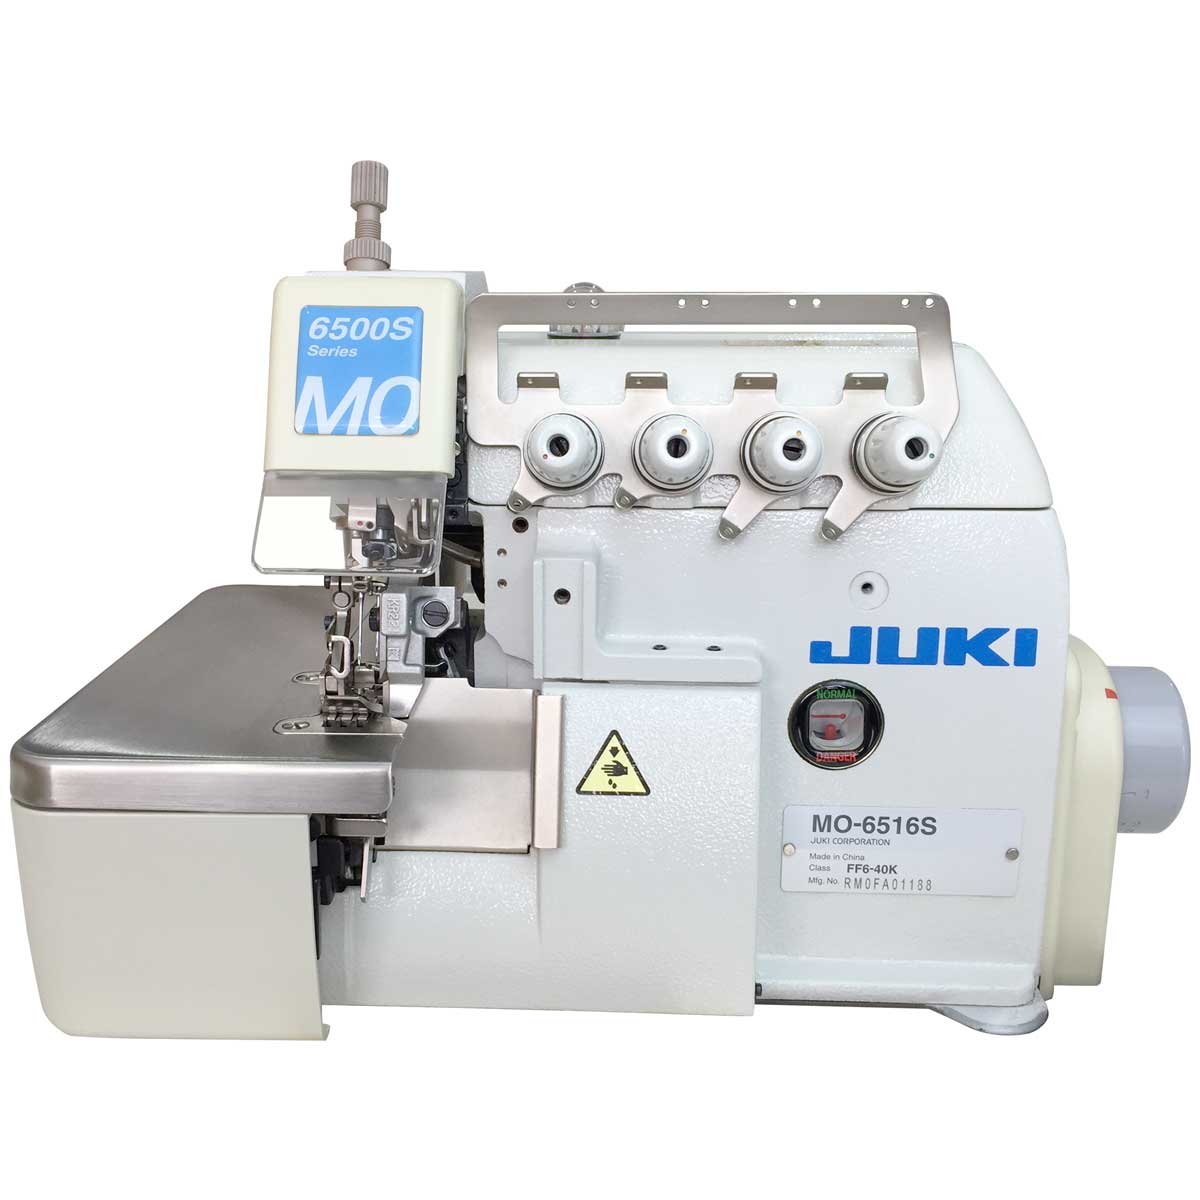 Оверлок 5 ниток. Оверлок промышленный Juki 5 ниточный. Промышленный 5 ти ниточный оверлок Juki МО 6516s. Стачивающе-обметочная машина Juki. Стачивающе-краеобметочная швейная машина Juki mo-6816s-ff6-30h.